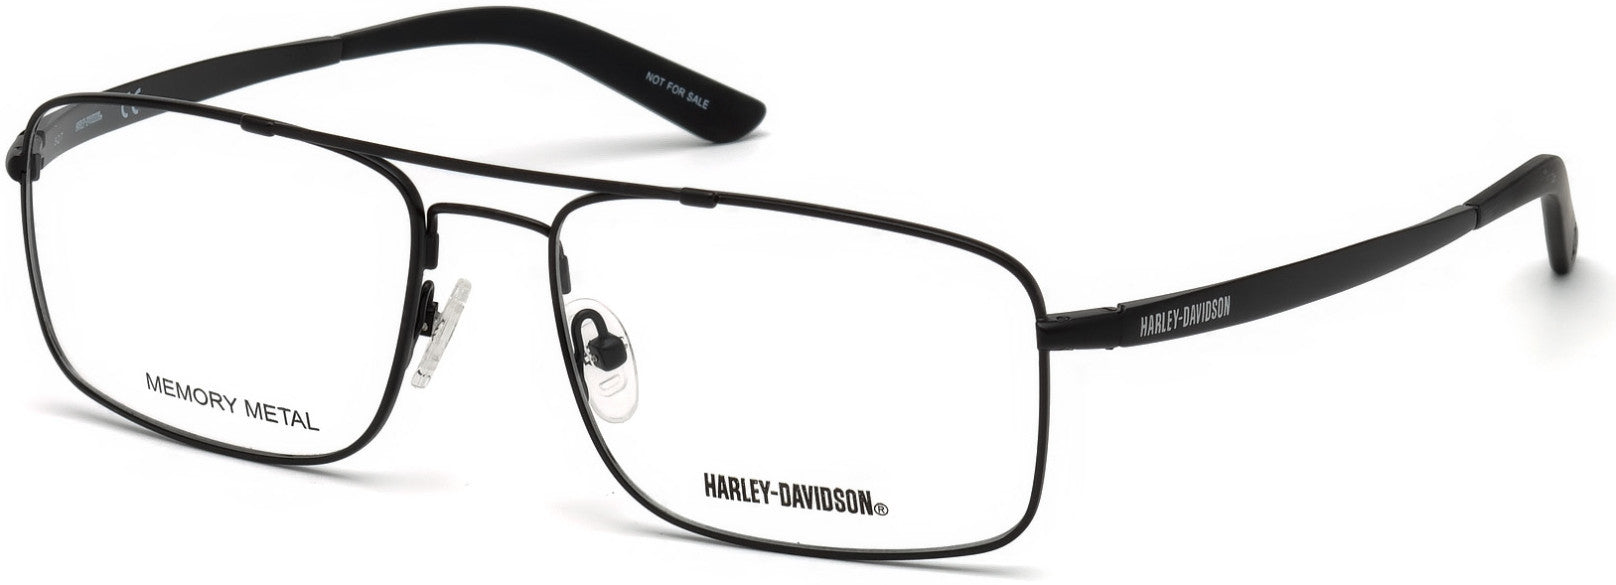 Harley-Davidson HD0770 Geometric Eyeglasses 002-002 - Matte Black